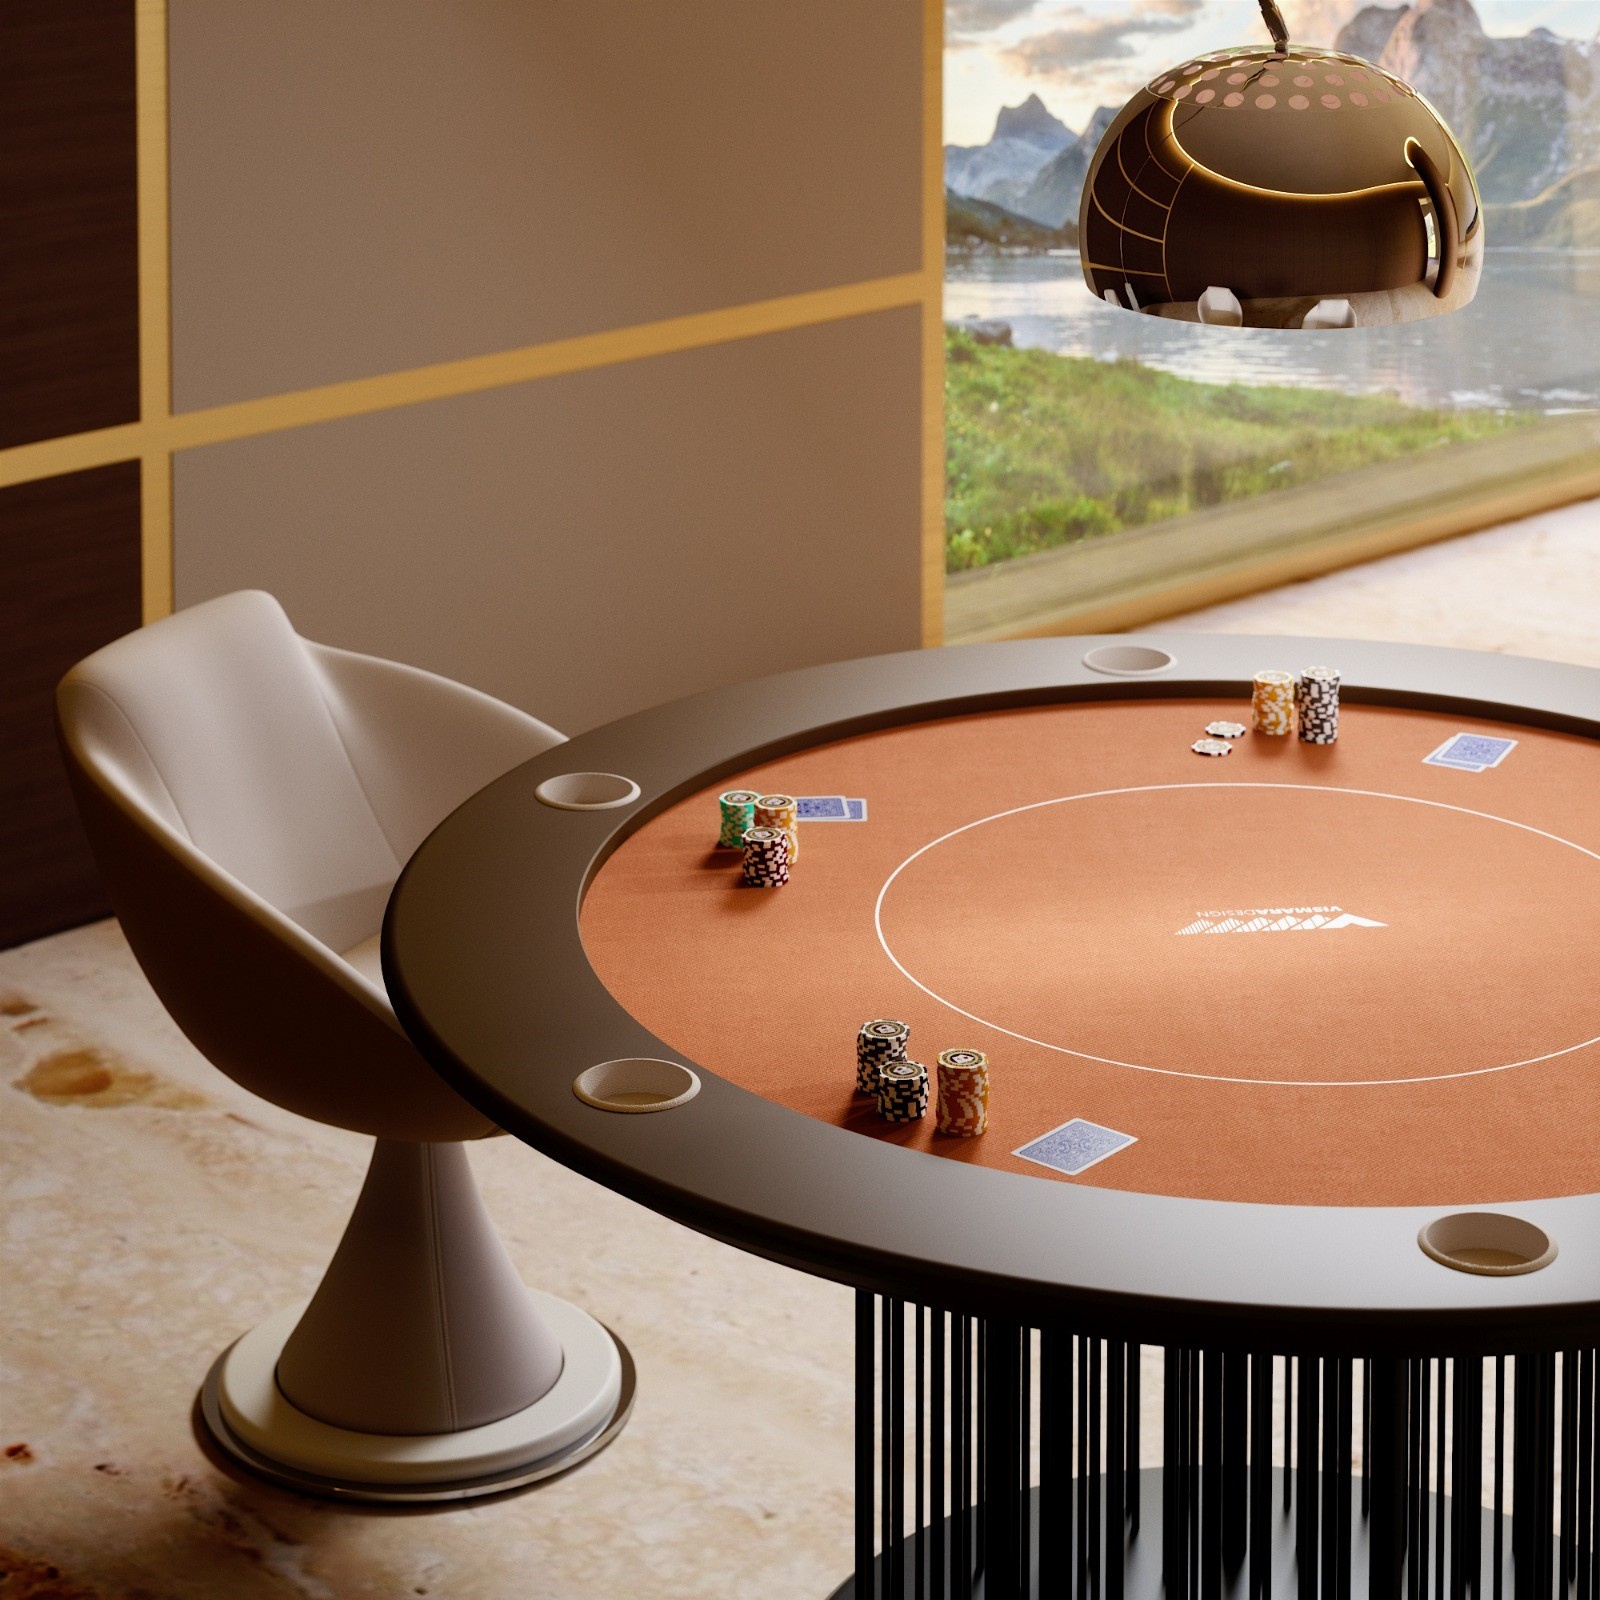 tavolo da poker rotondo moderno